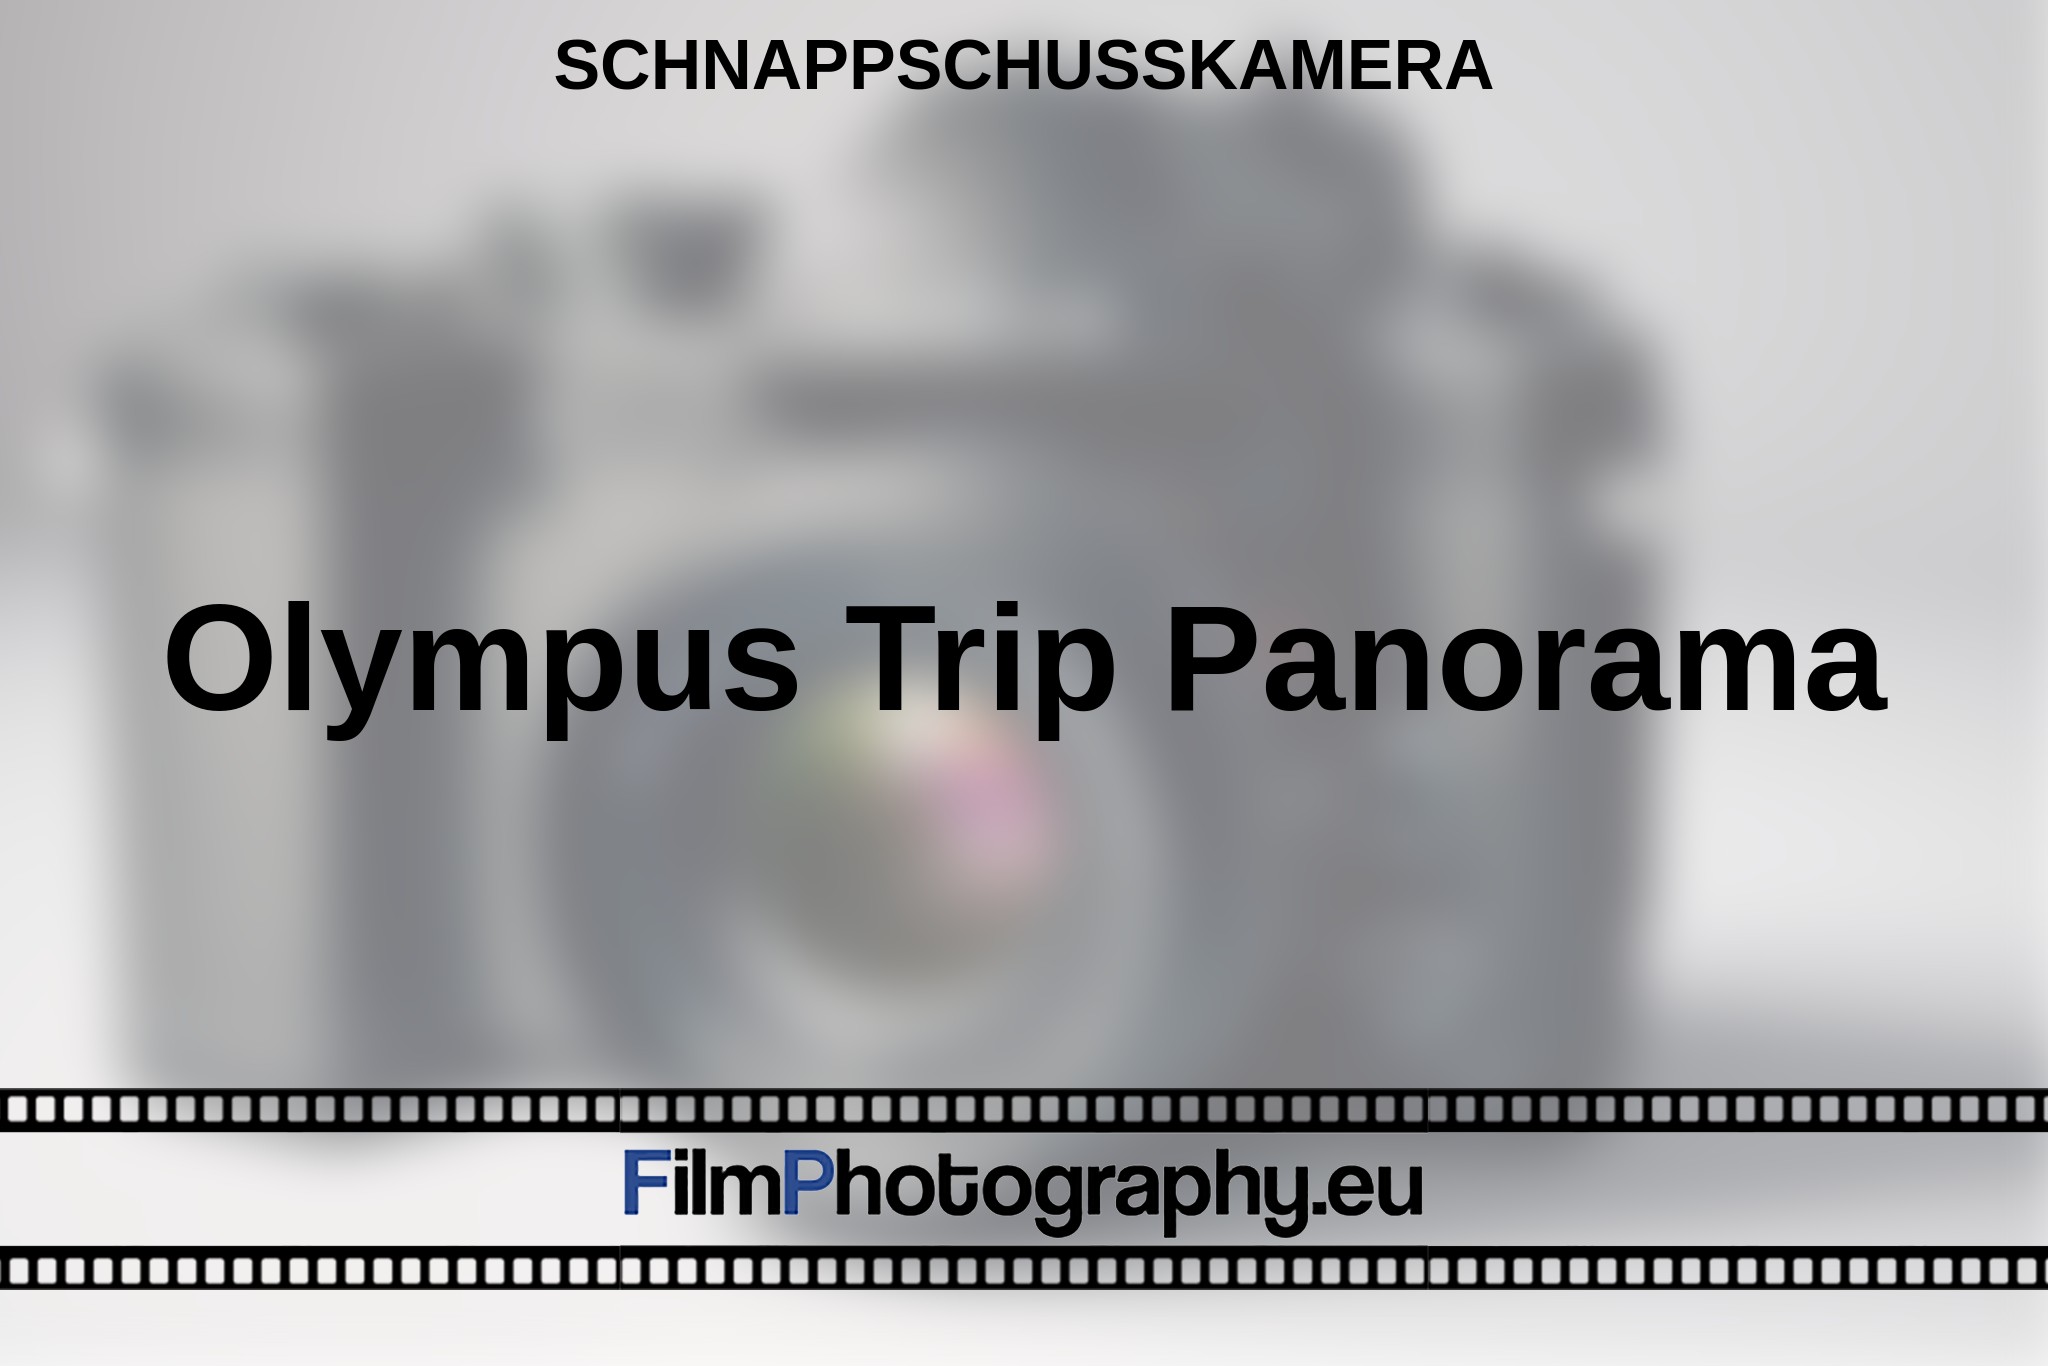 olympus-trip-panorama-schnappschusskamera-bnv.jpg